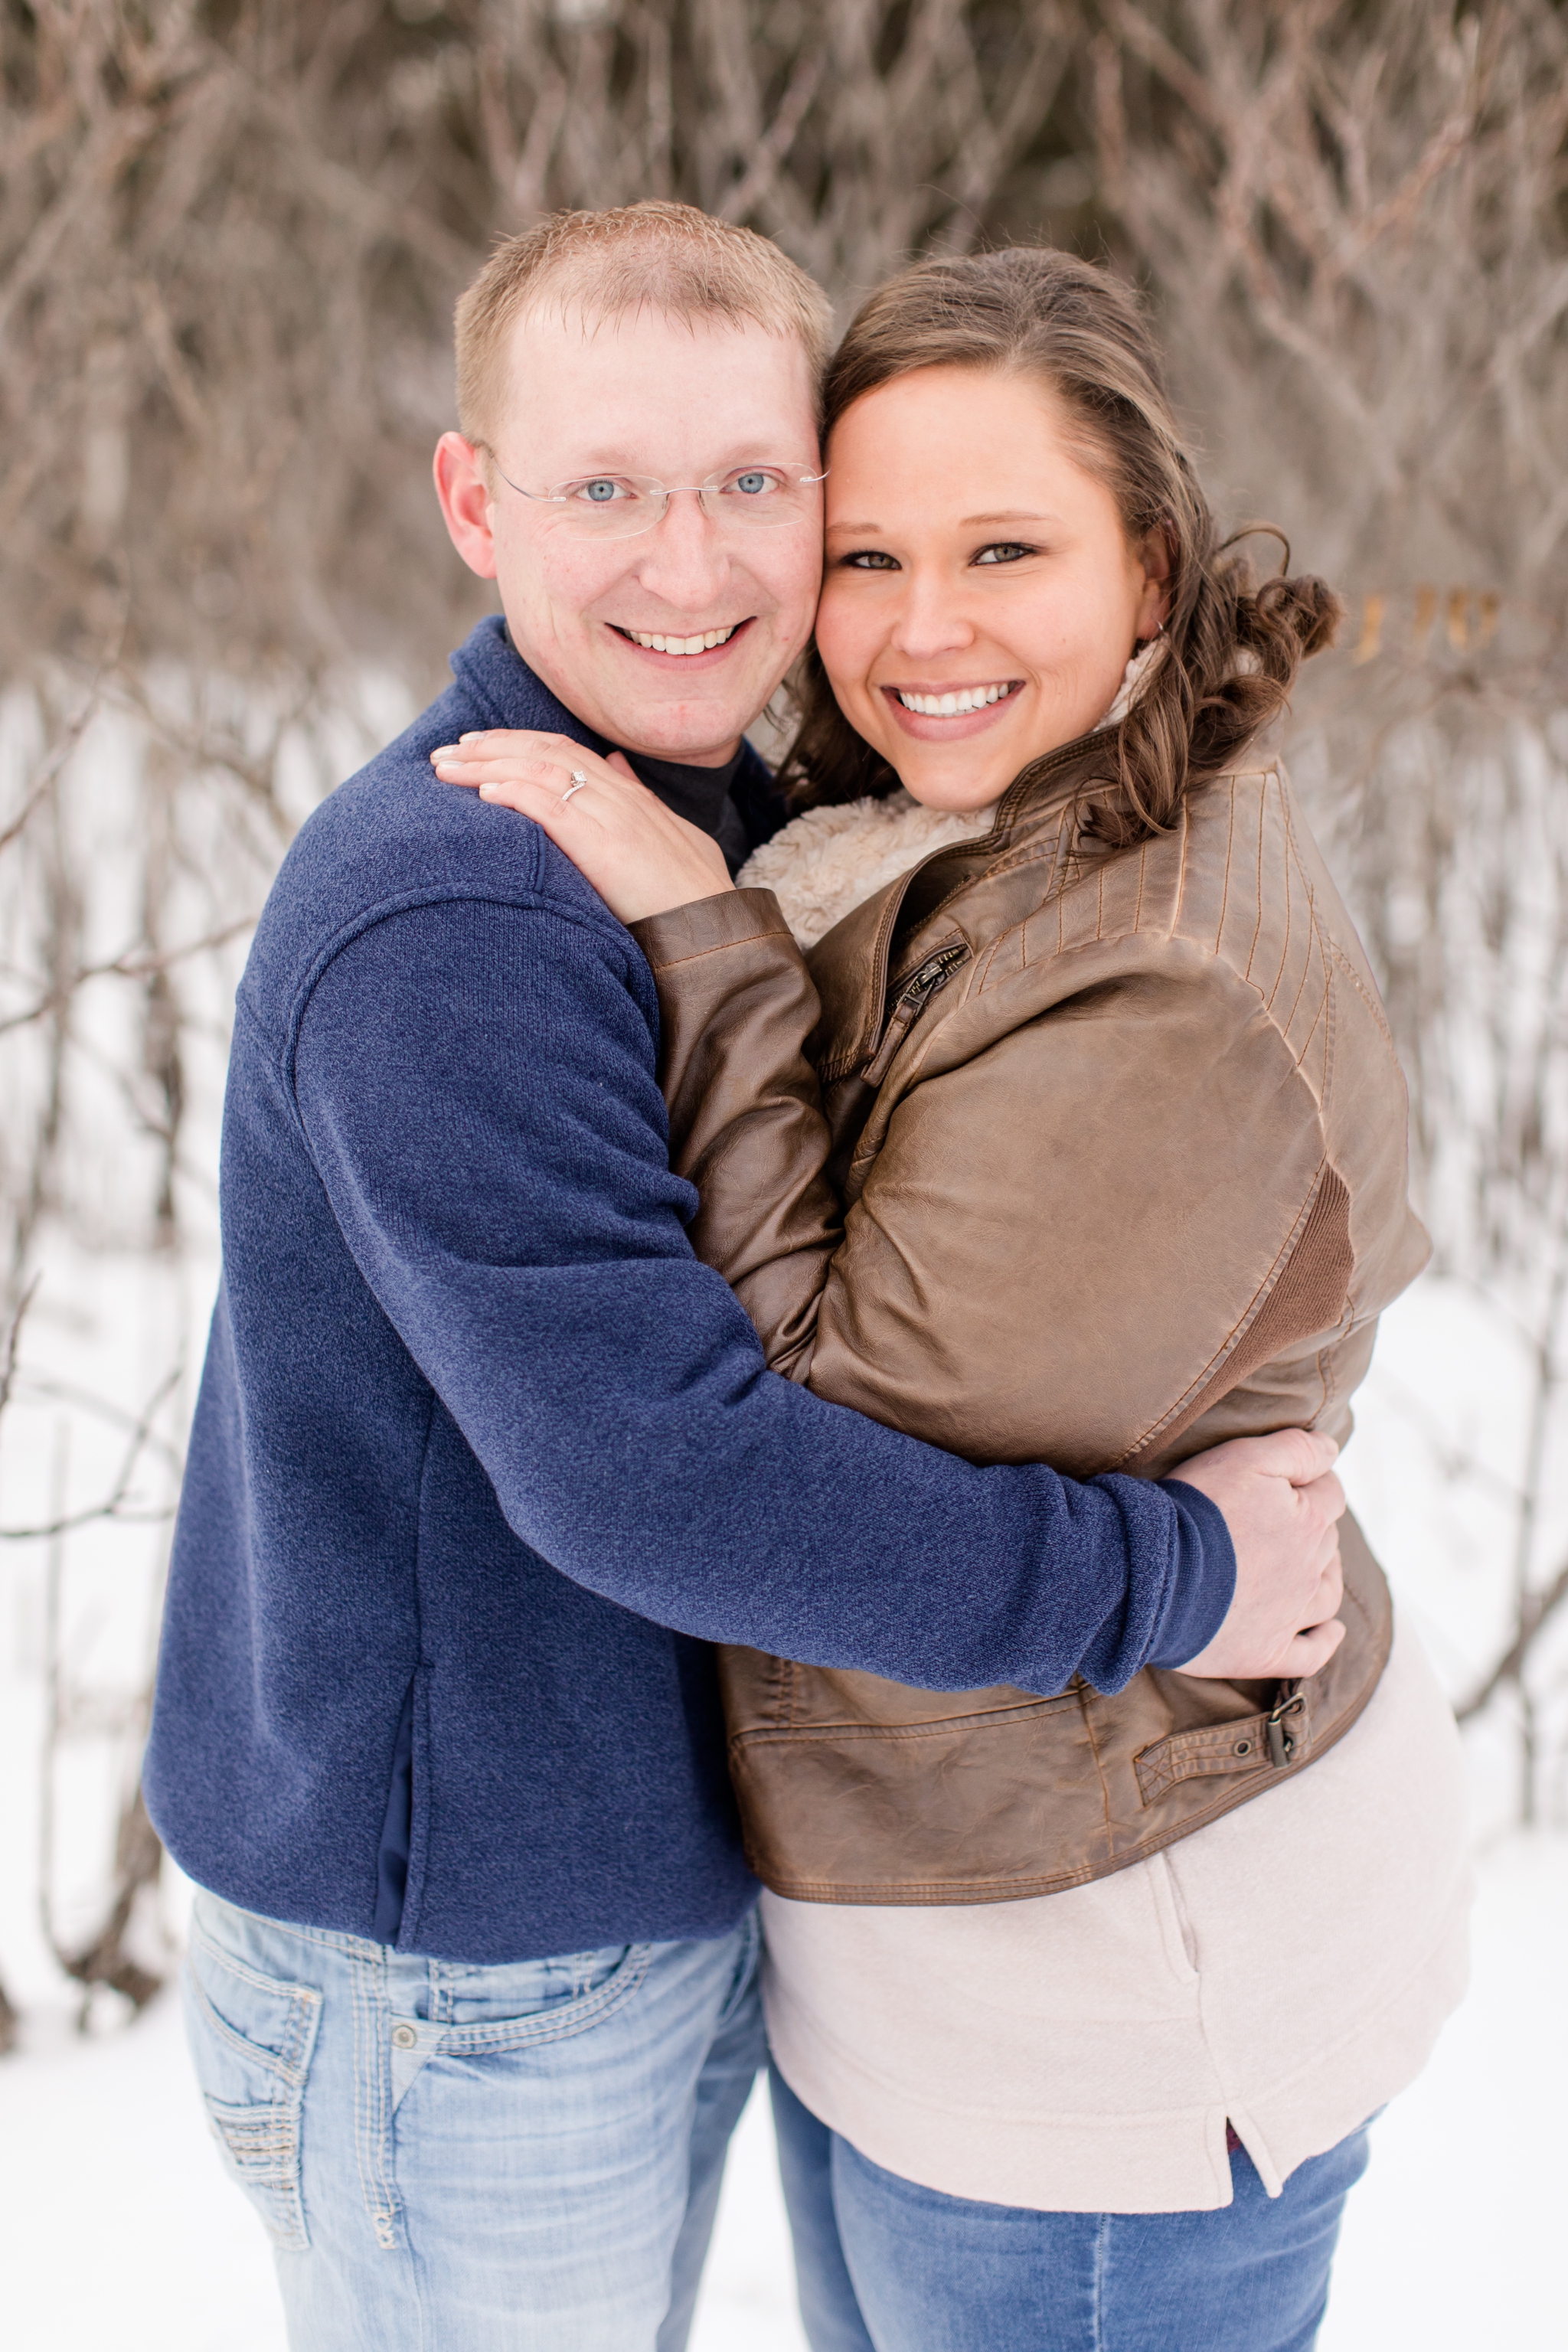 Fargo Moorhead Engagement Photographers, Winter Wedding Photographers, Winter Engagements